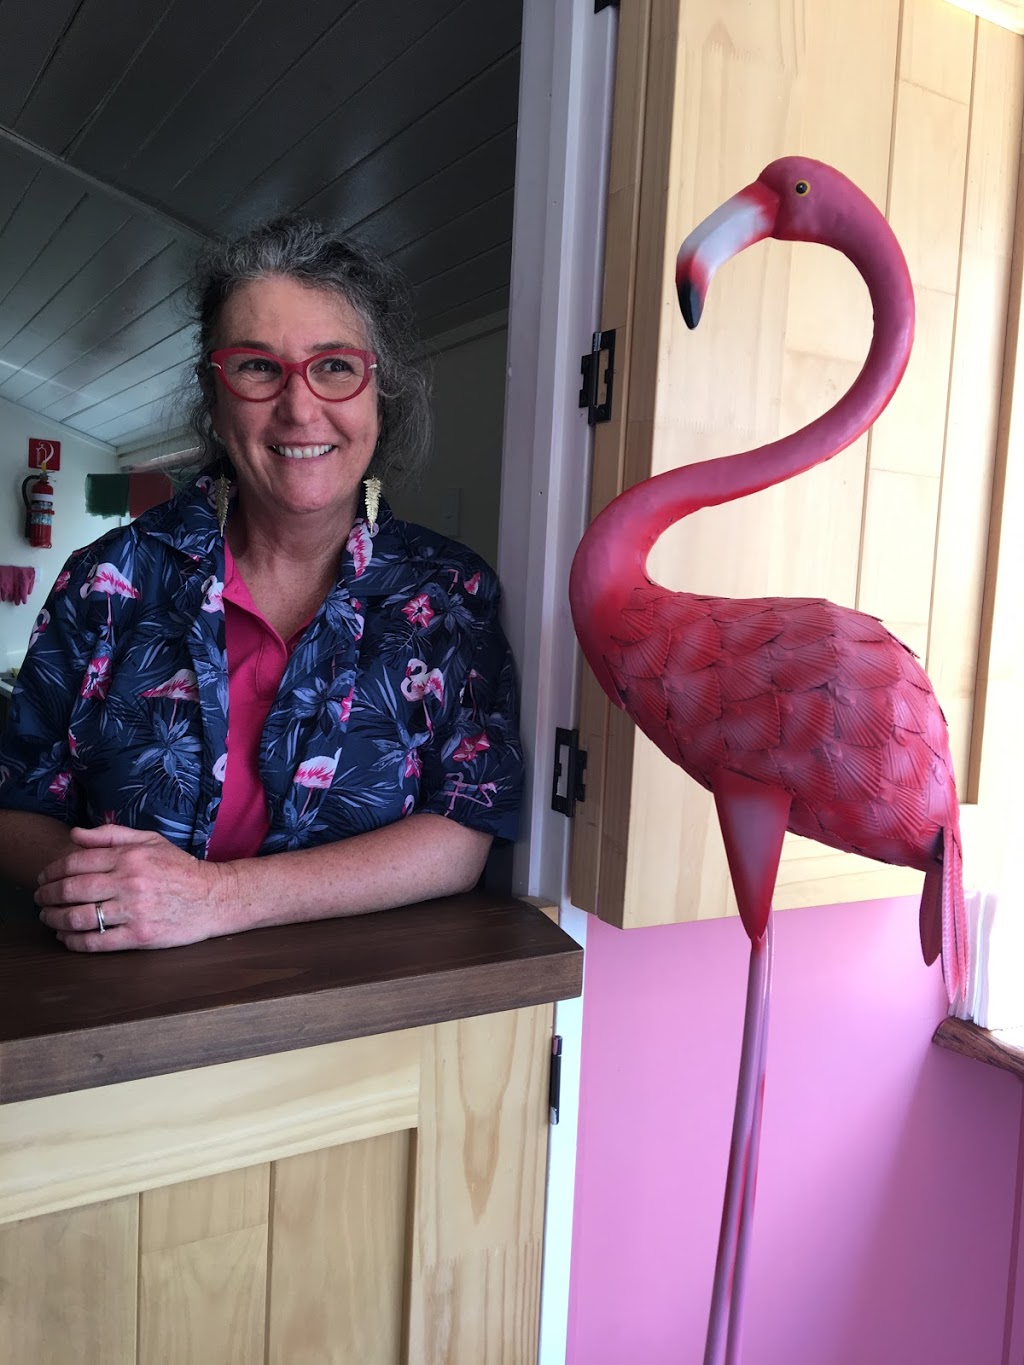 Pink Flamingo Yarraman | cafe | 19 Toomey St, Yarraman QLD 4614, Australia | 0408988100 OR +61 408 988 100